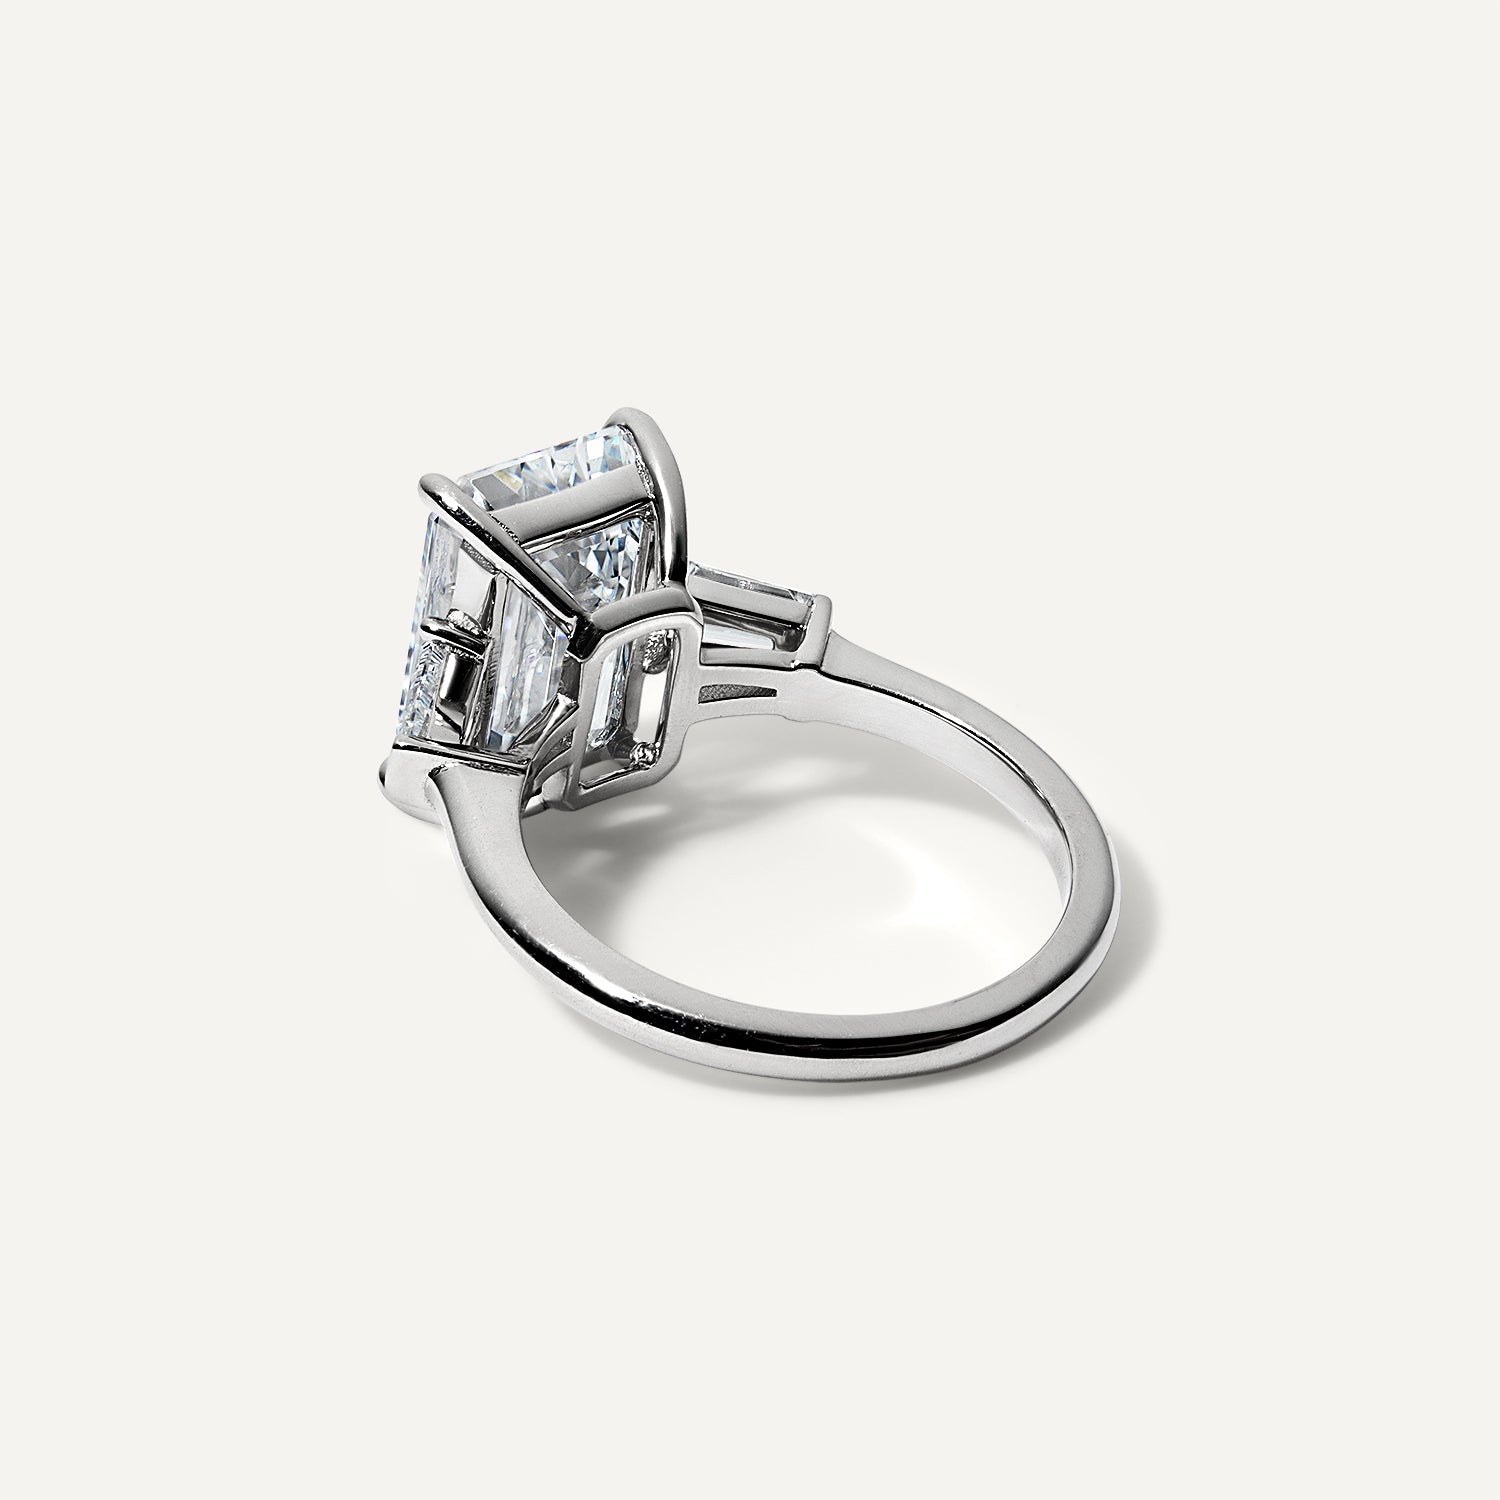 Three stone emerald lab diamond engagement ring.